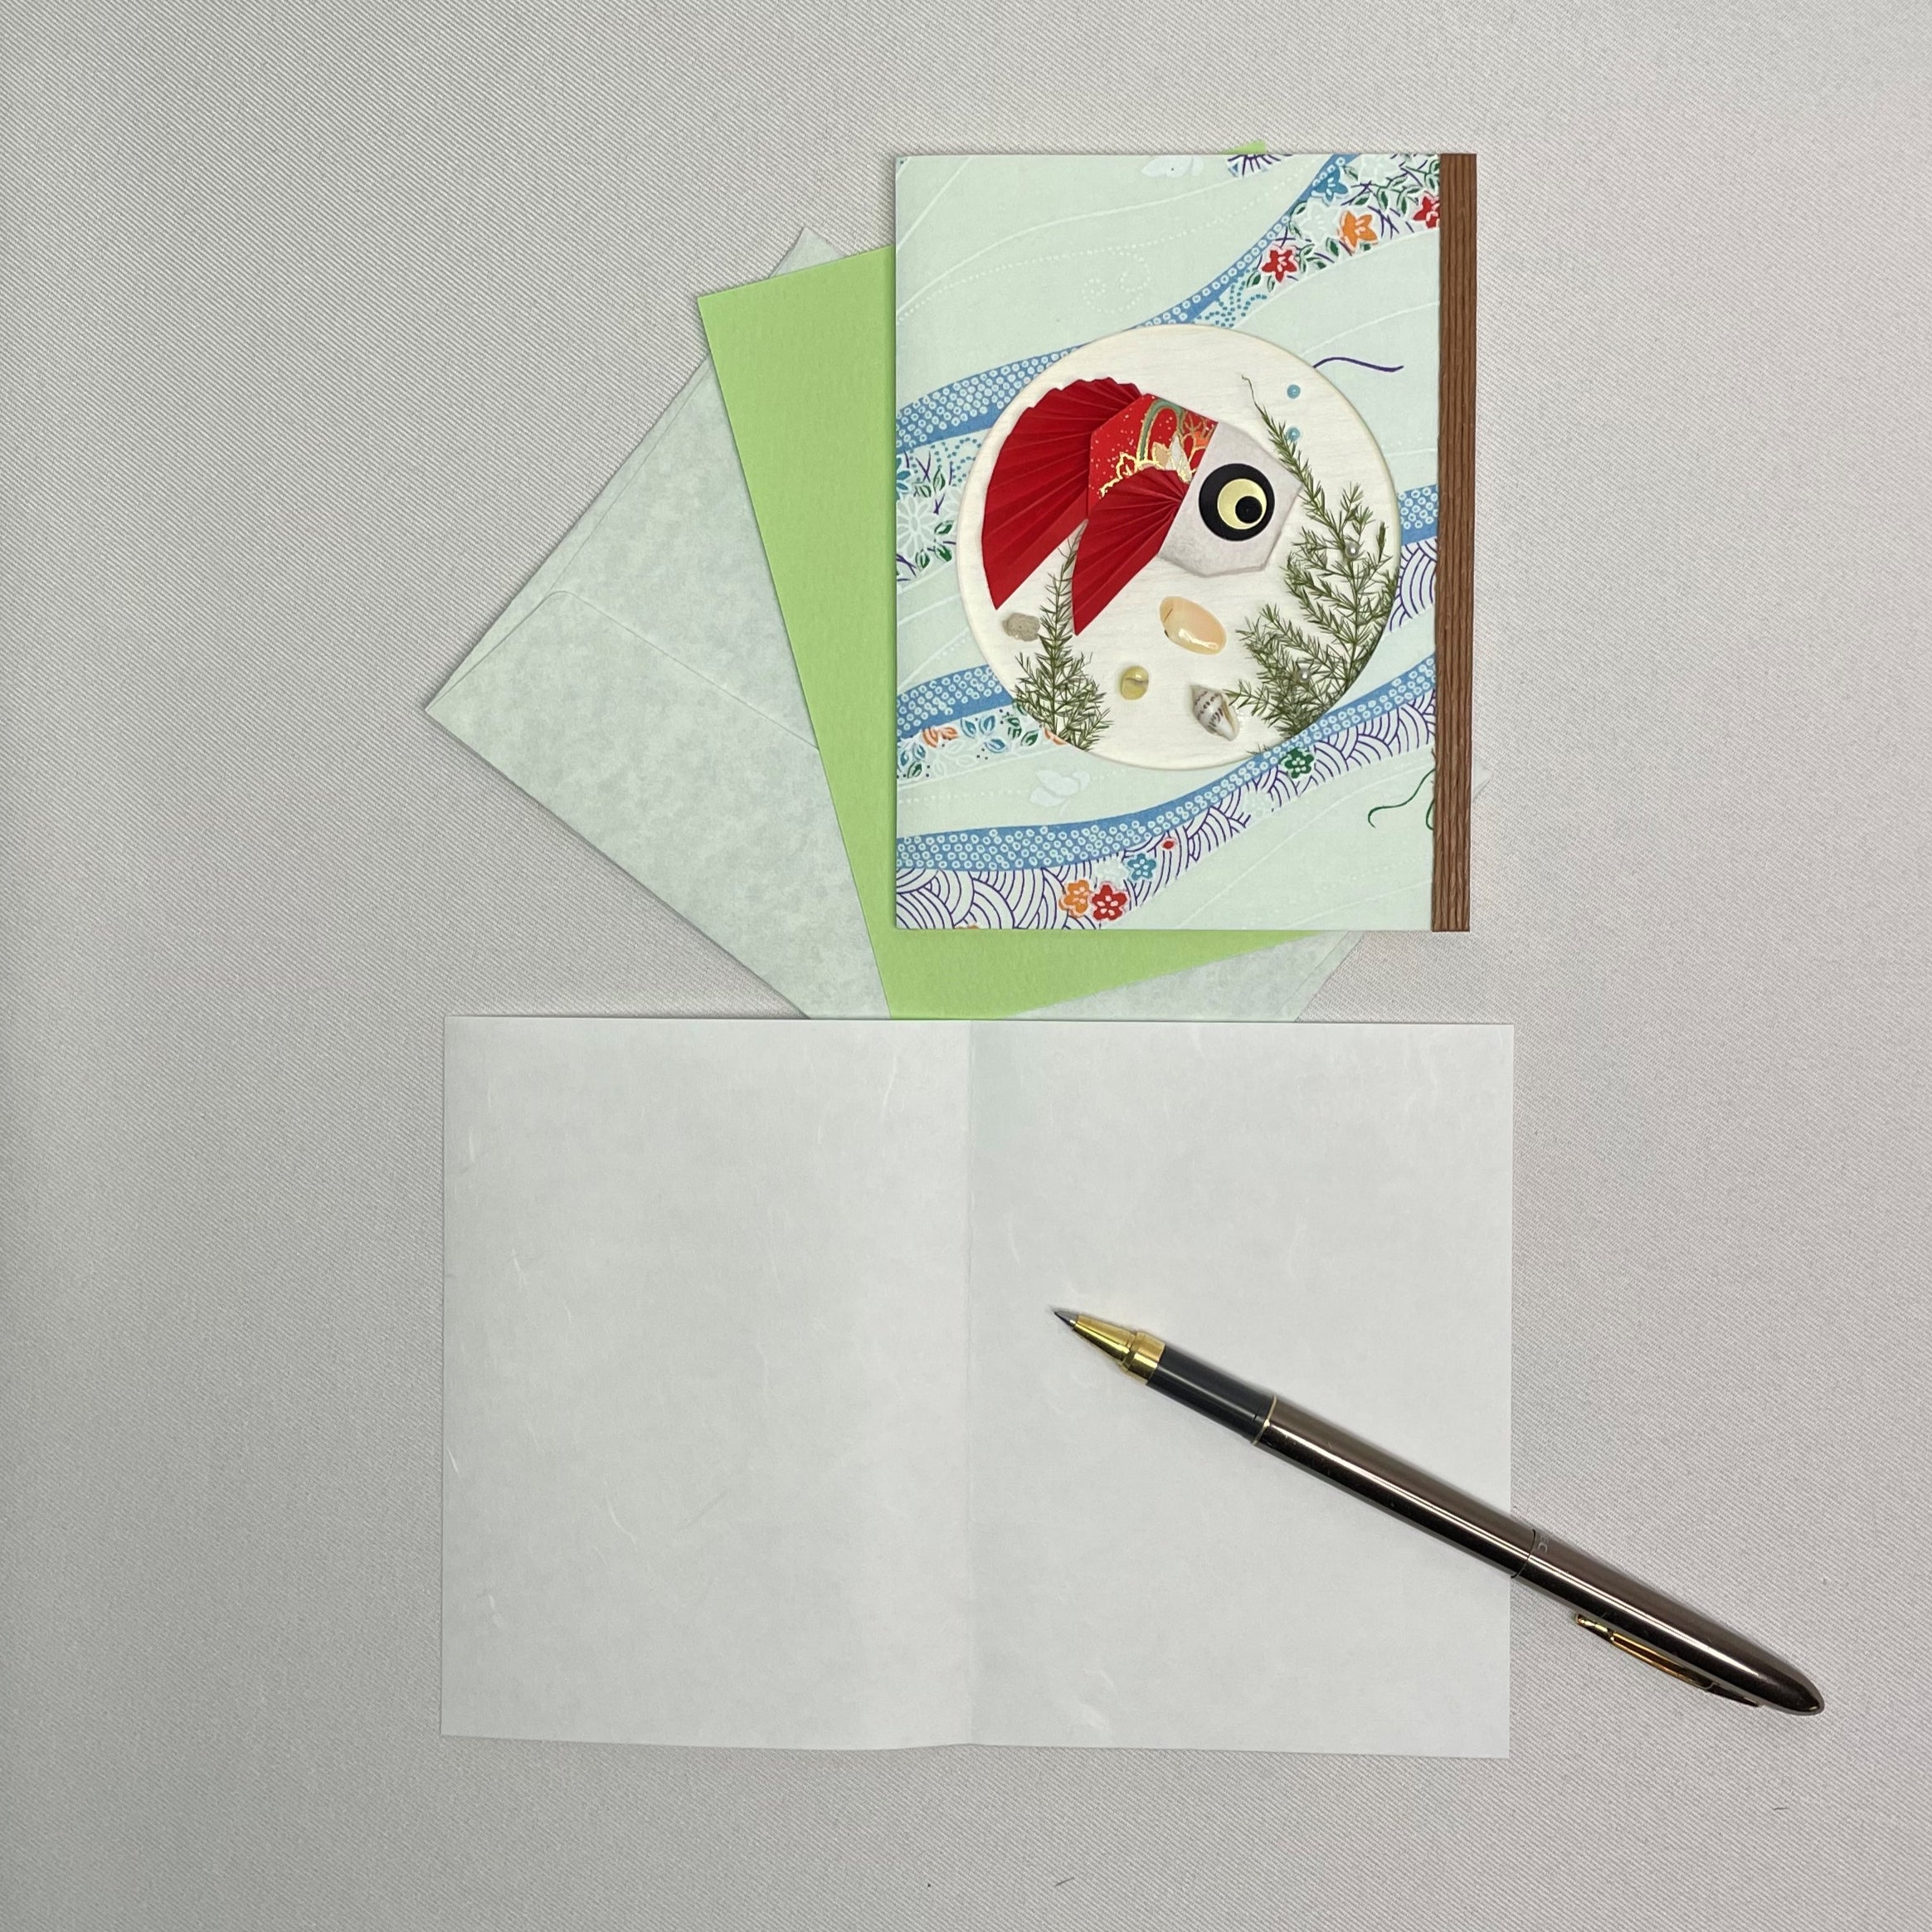 Handmade Greeting Card "Redfish"